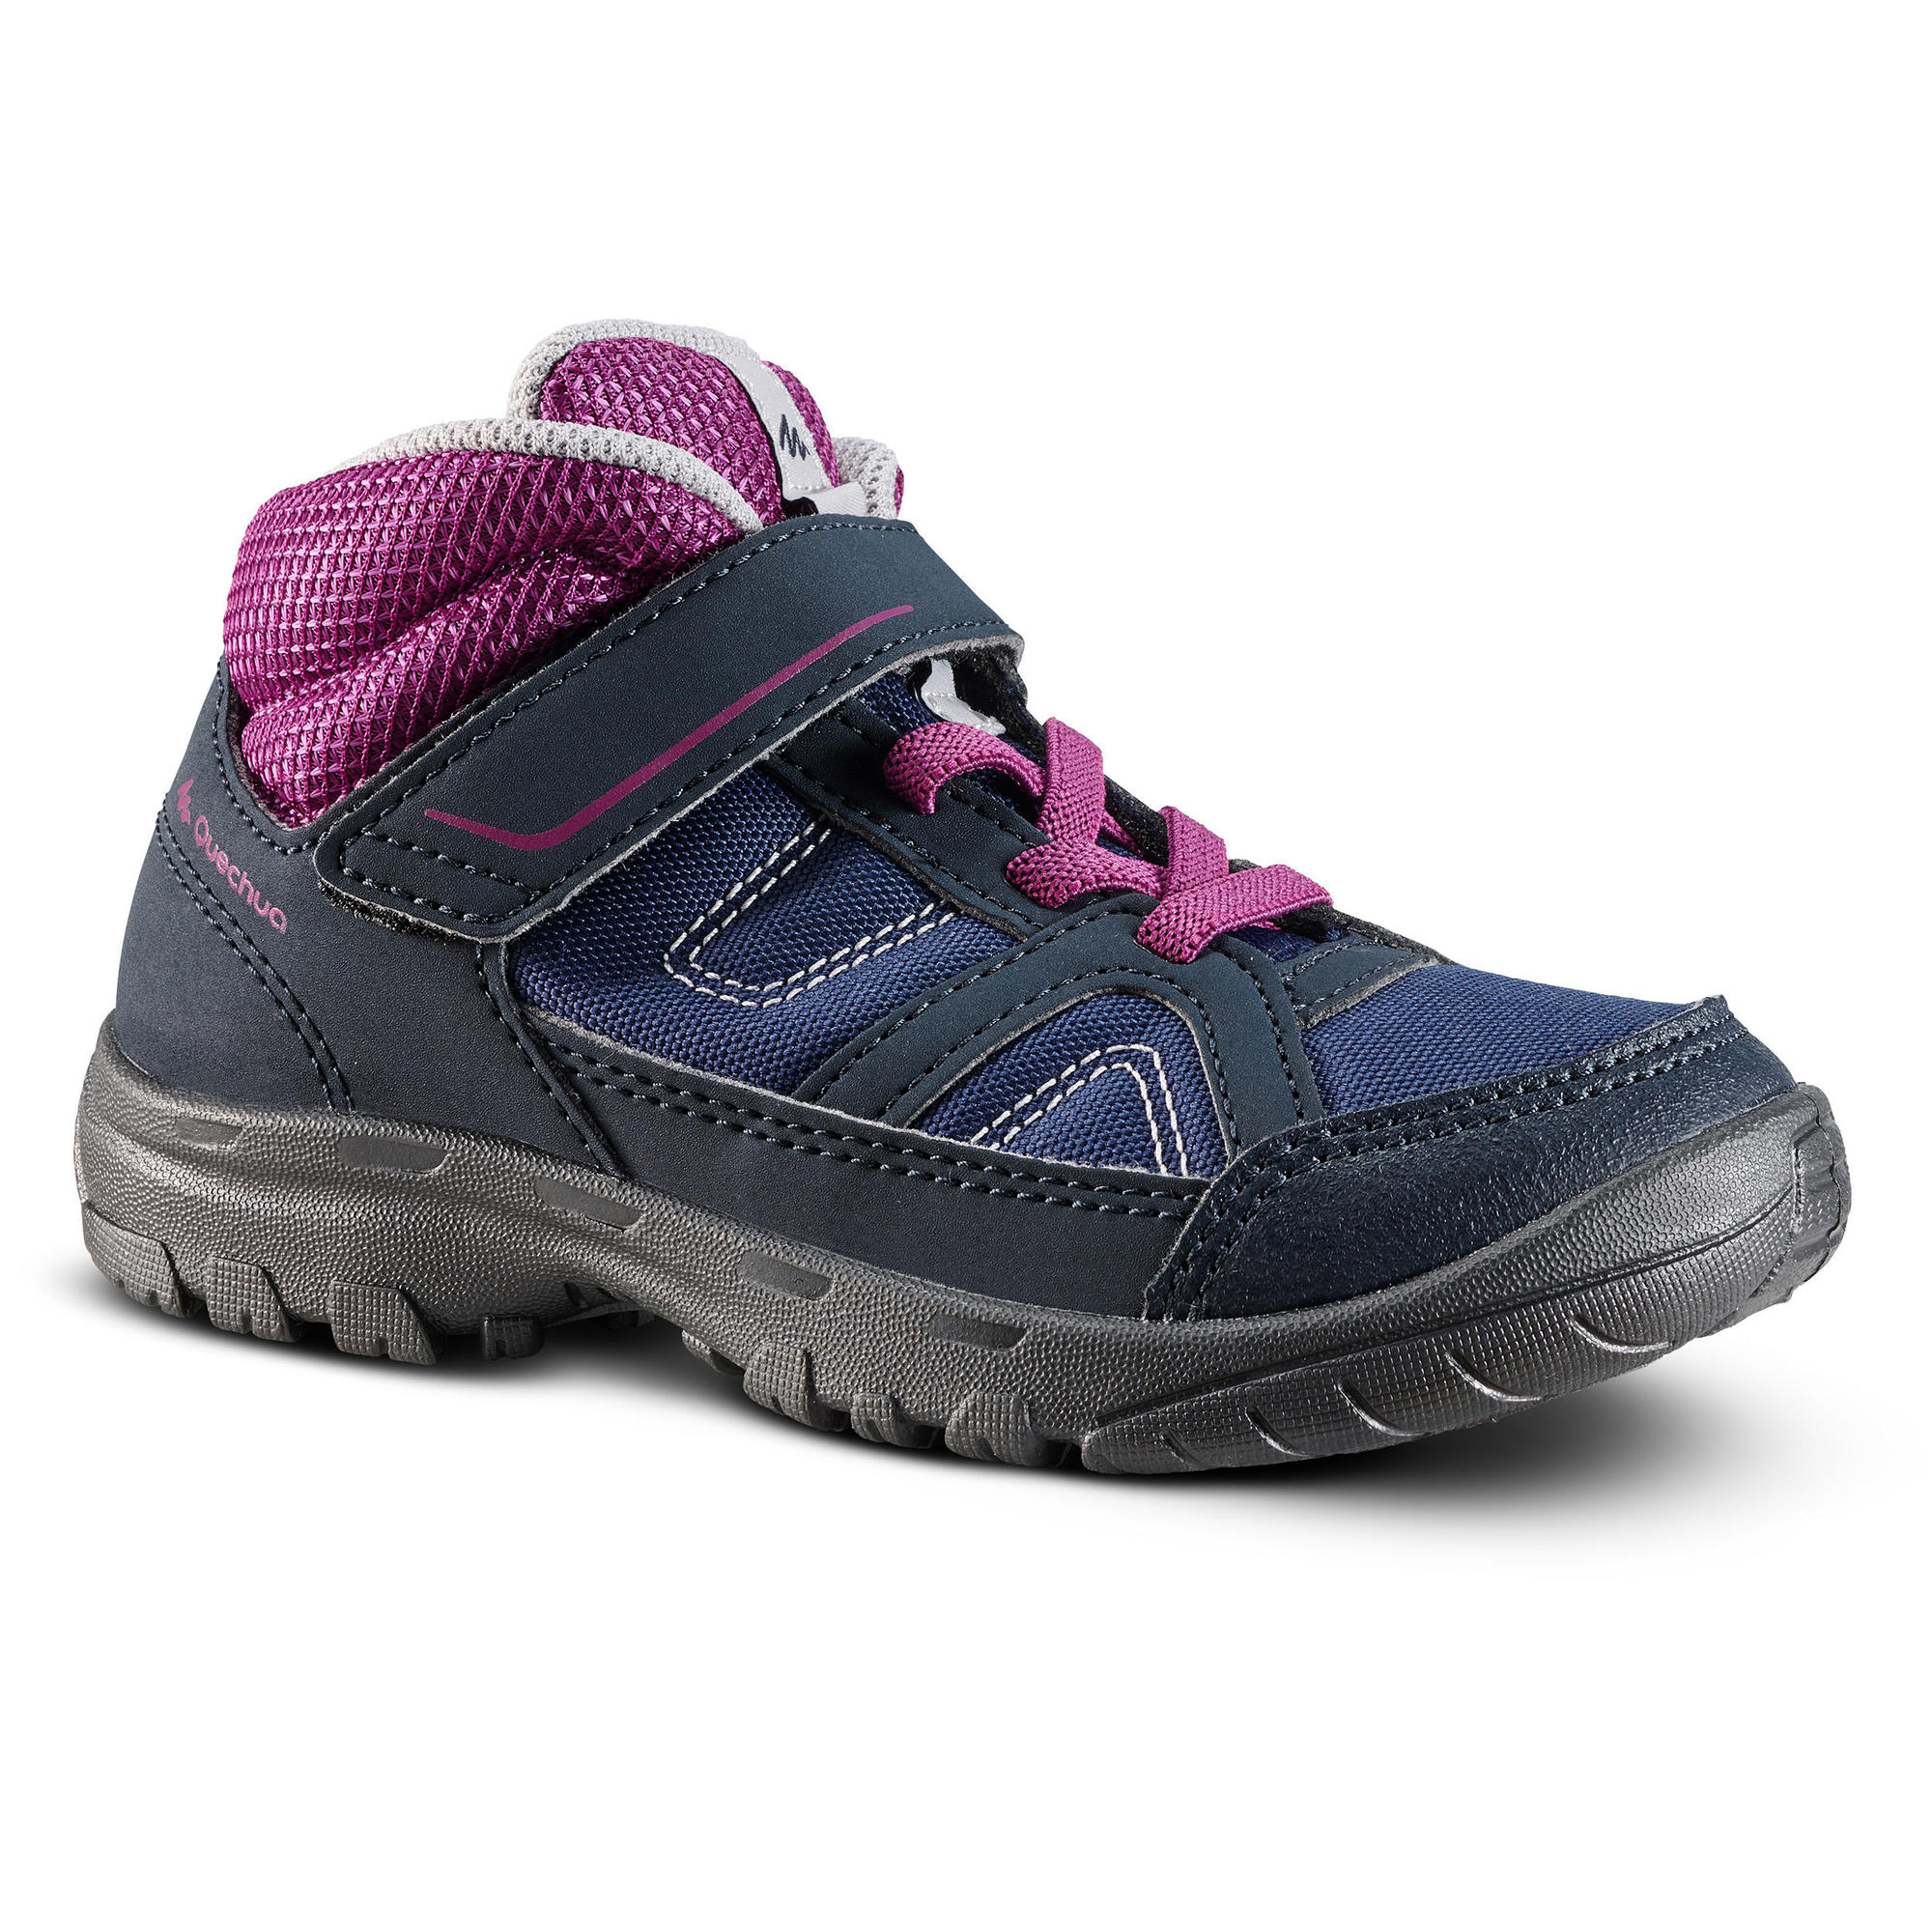 Decathlon MH500, High-Top Hiking Shoes - Walmart.com